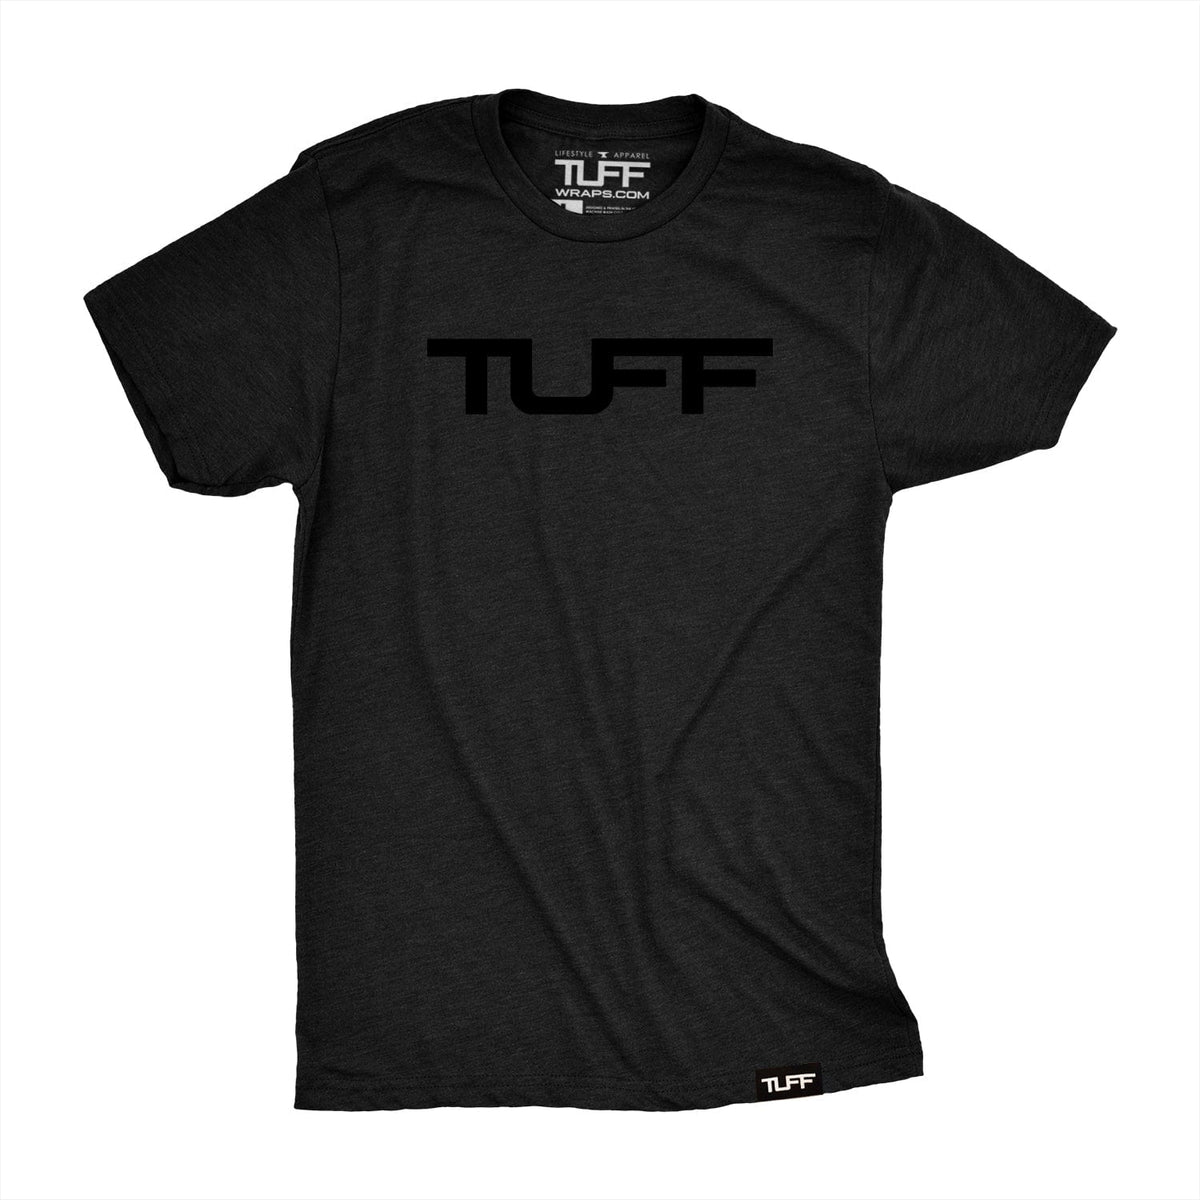 TUFF Blackout Tee T-shirt